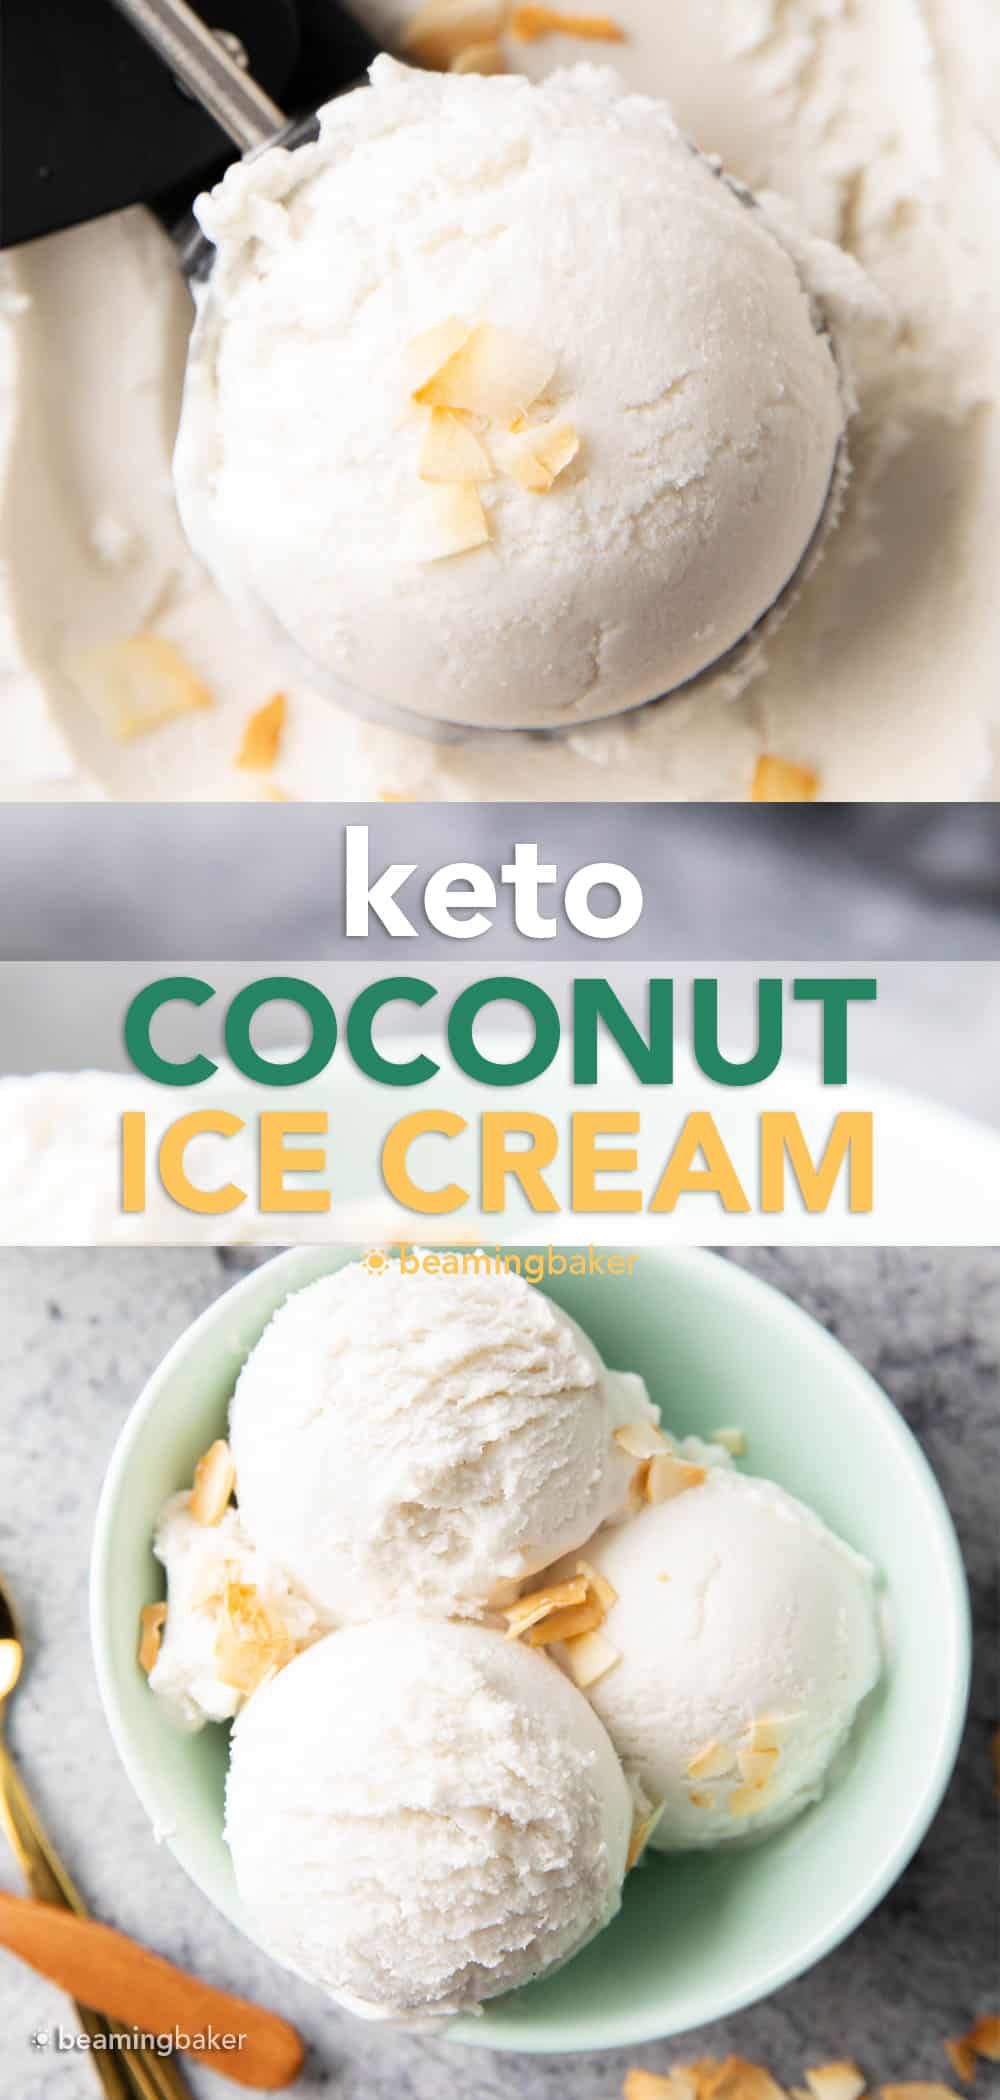 Coconut Milk Keto Ice Cream – Keto Coconut Ice Cream: the best coconut milk keto ice cream—bursting with coconut flavor & low carb. Keto coconut ice cream that has just 1 net carb per serving! #Keto #CoconutMilk #KetoIceCream #LowCarb #IceCream | Recipe at BeamingBaker.com